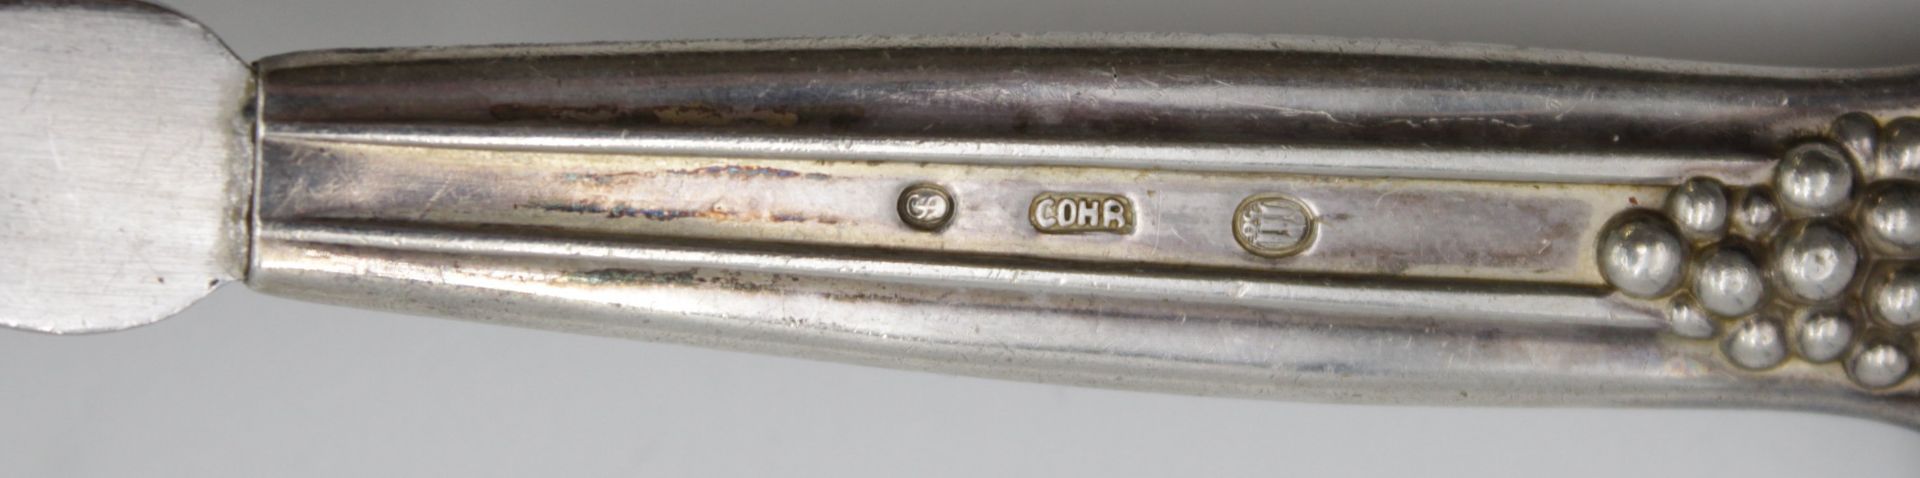 Saucenkelle, Silbergriff, Cohr Dänemark 1950, ca. L-18cm. - Bild 3 aus 3